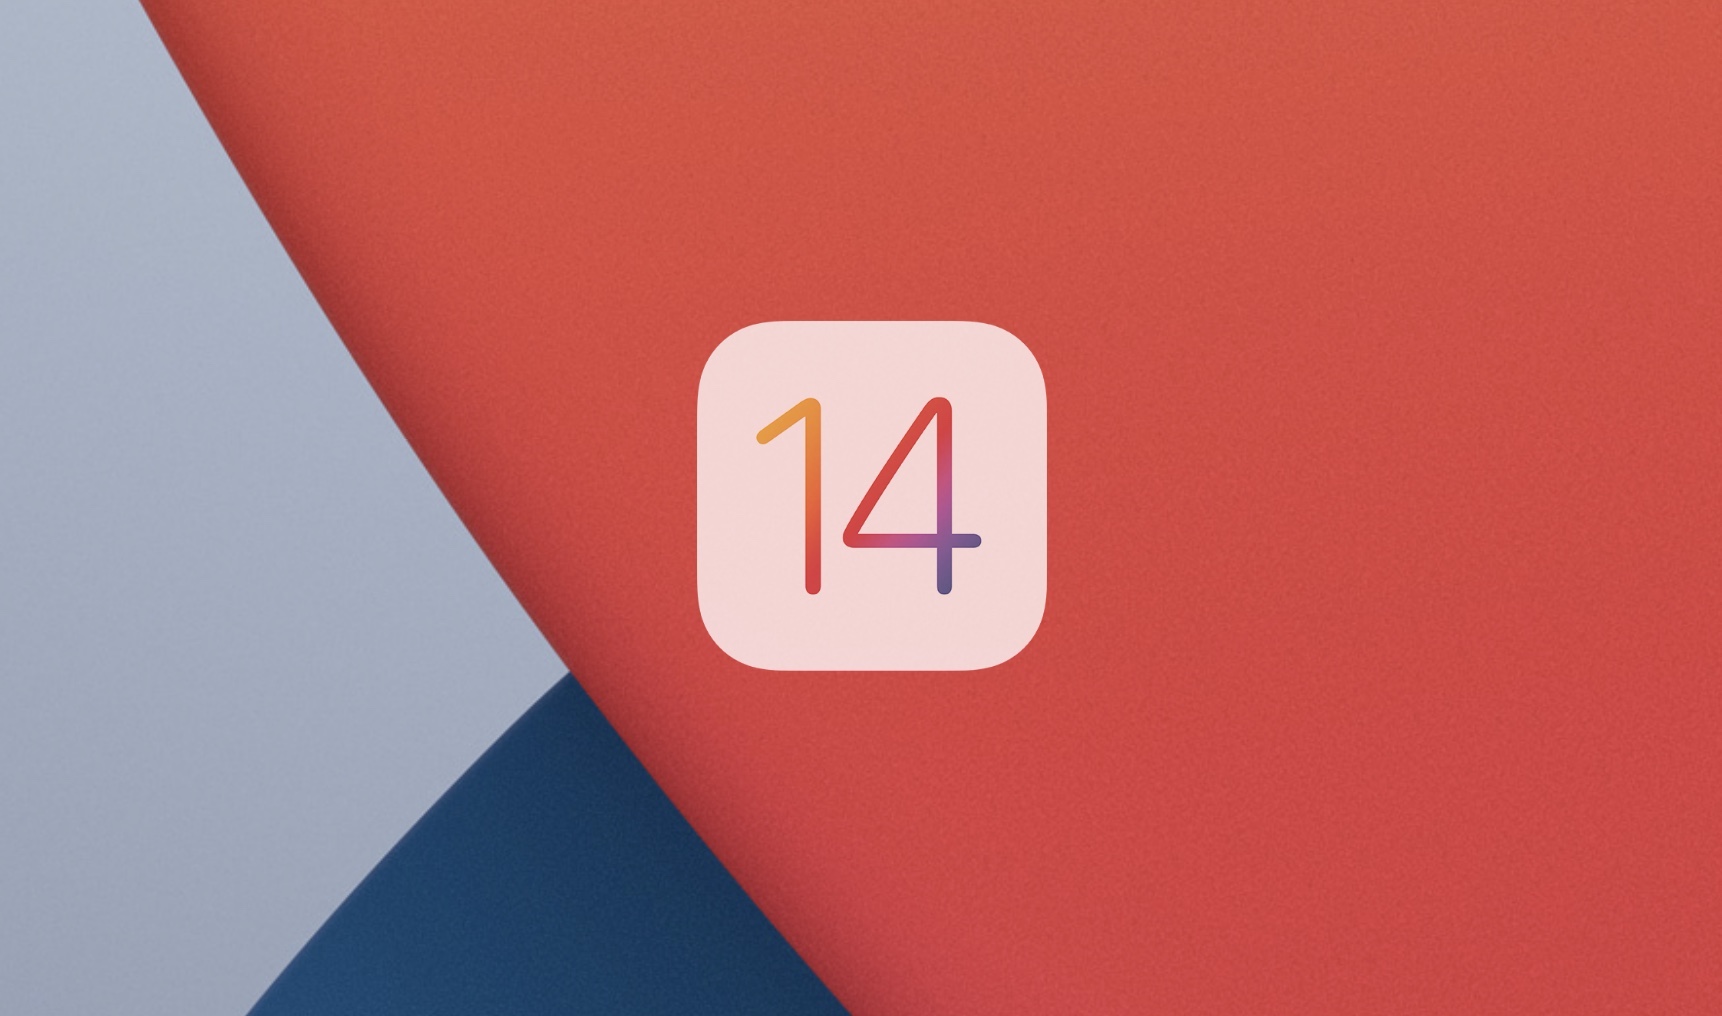 iOS 14.3 developer beta